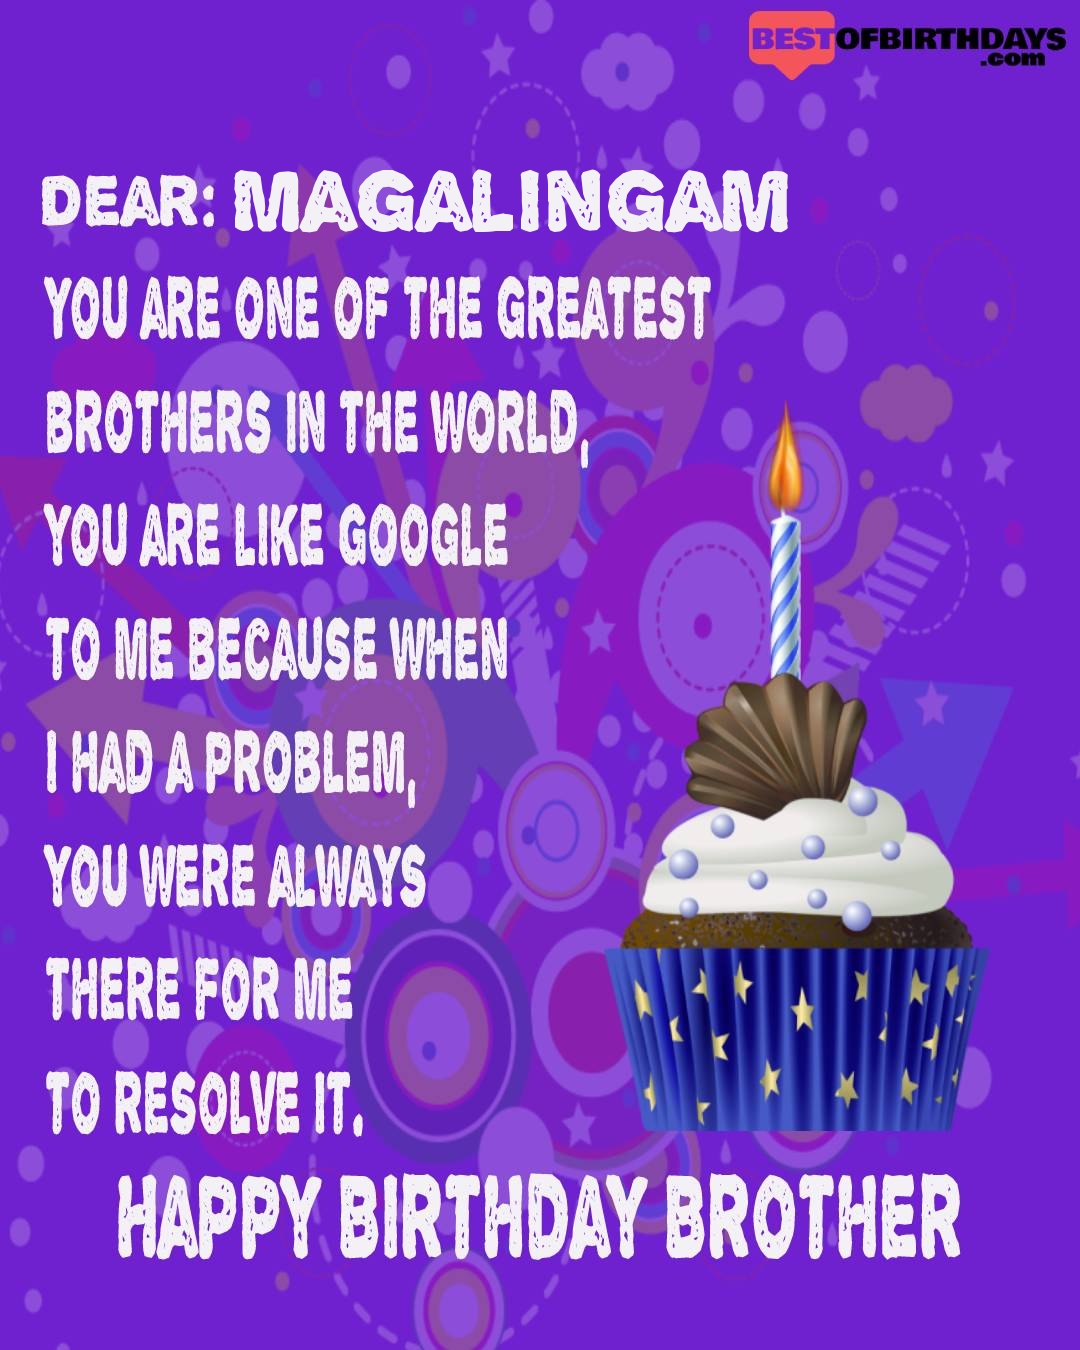 Happy birthday magalingam bhai brother bro